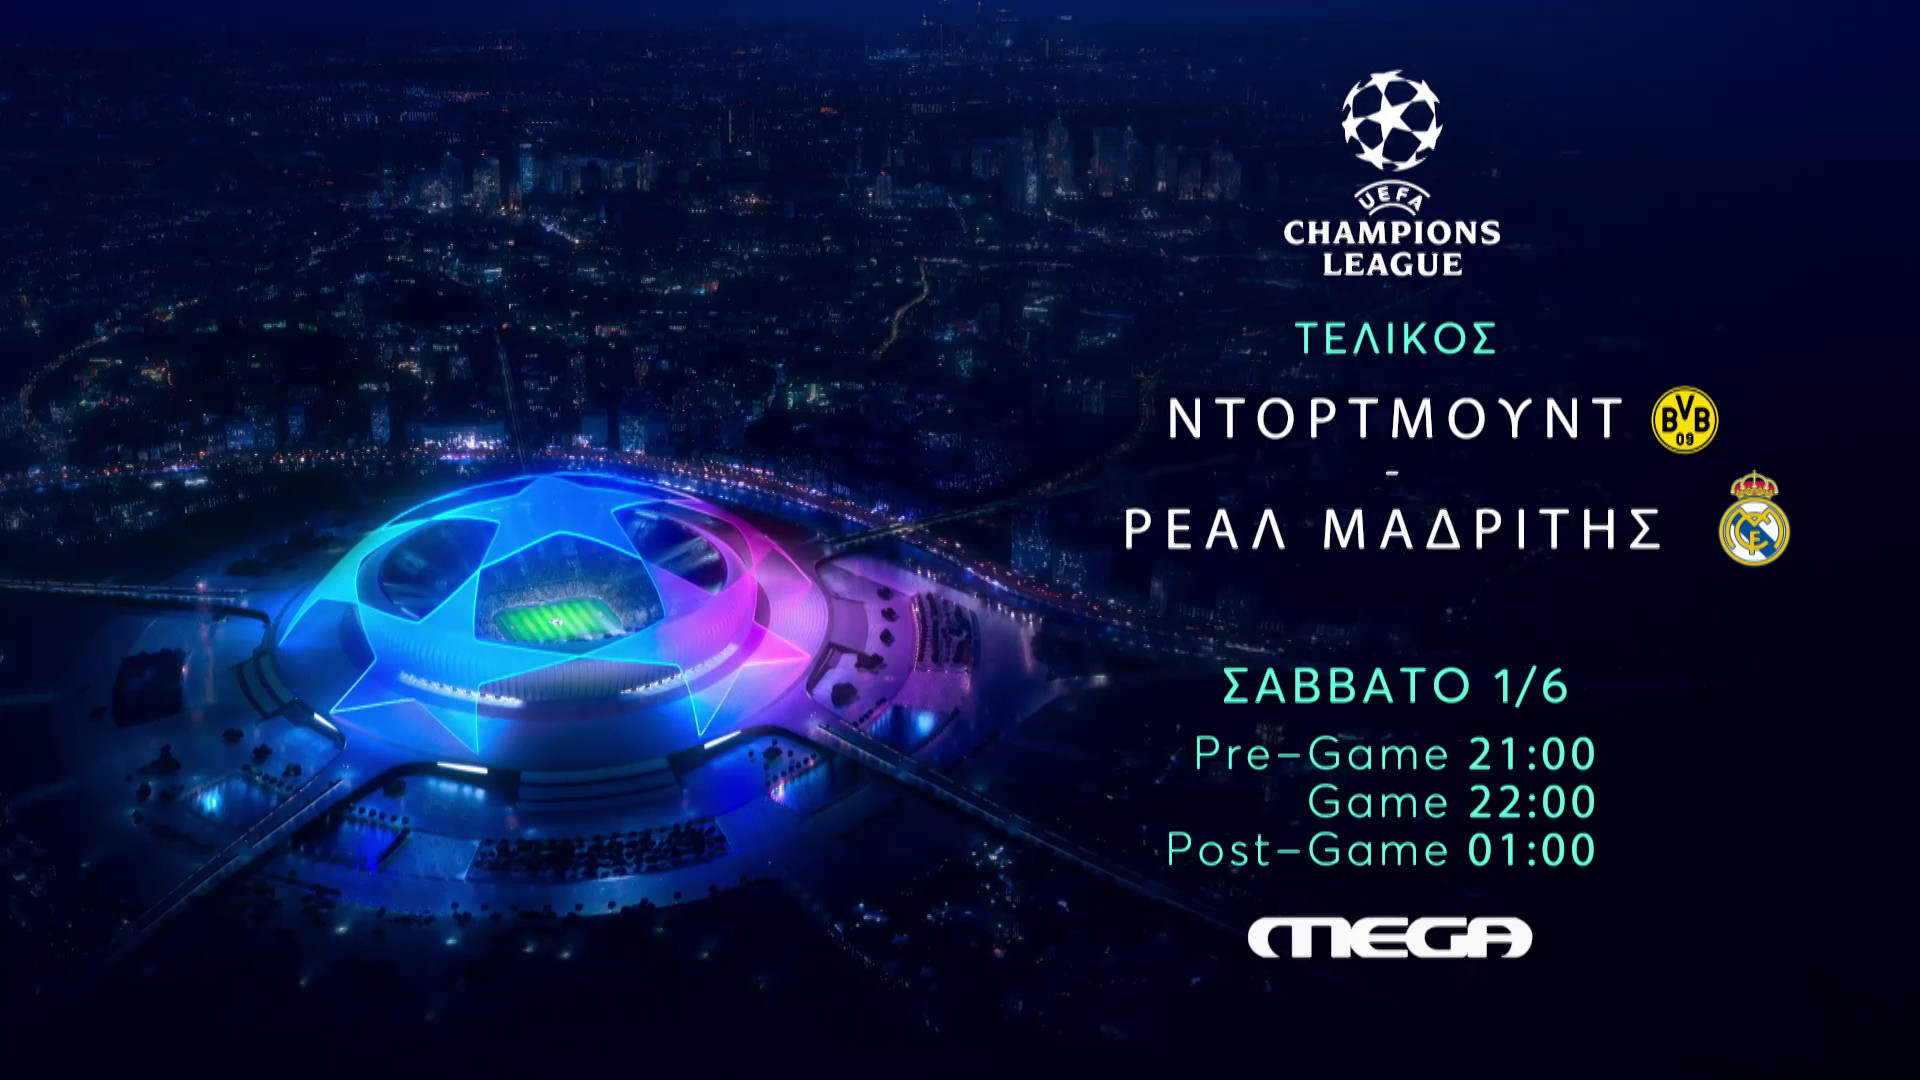 UEFA Champions League: Ο μεγάλος τελικός Ντόρτμουντ - Ρεάλ Μαδρίτης στο MEGA